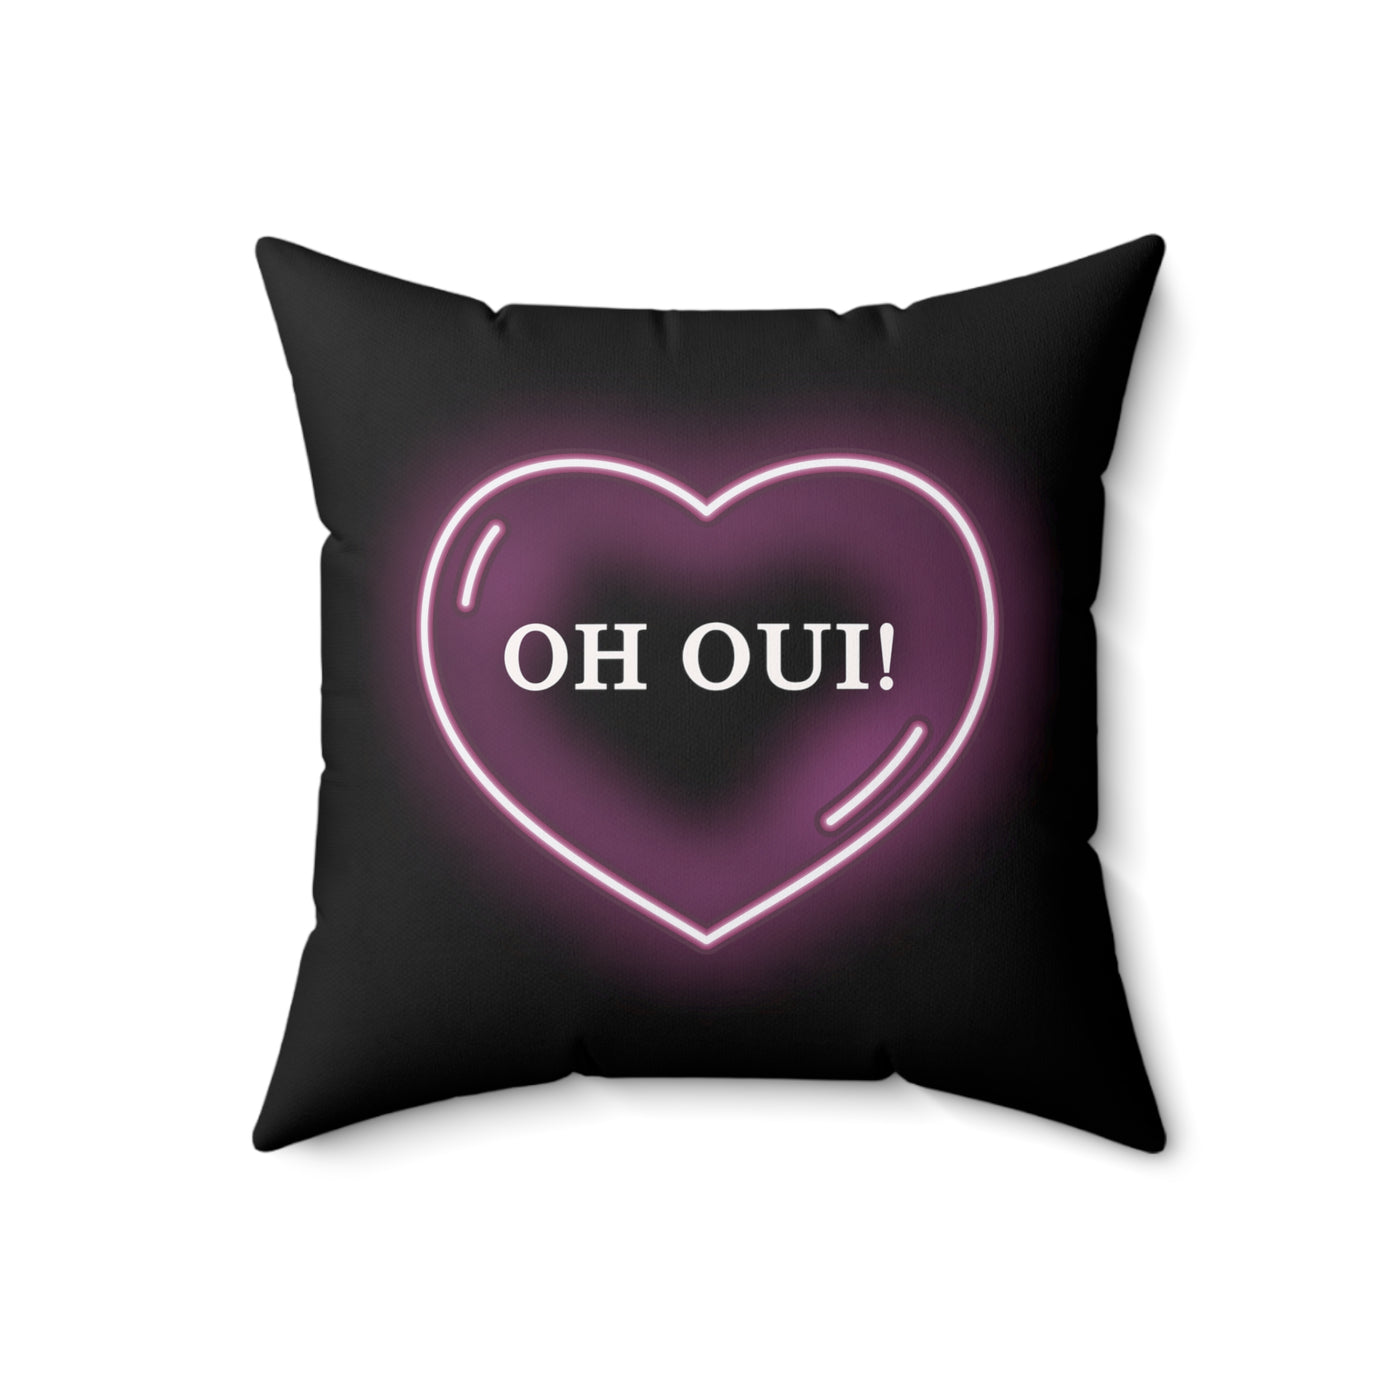 Love Mood Fantasy OH OUI! or AH NON! Spun Polyester Square Pillow